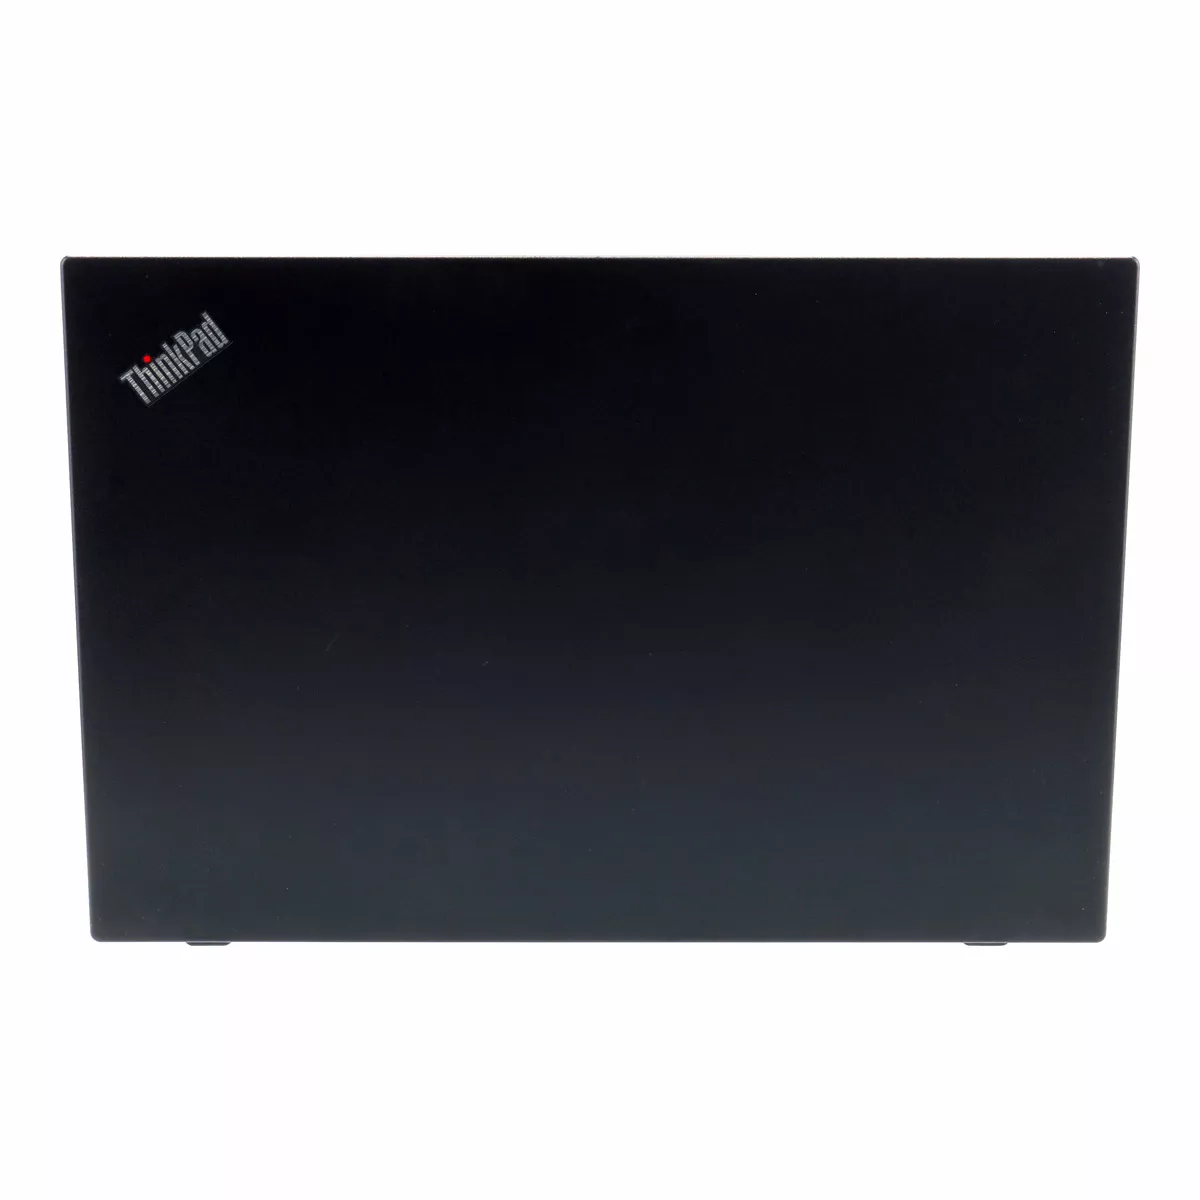 Lenovo ThinkPad L590 Core i5 8265U 240 GB M.2 nVME SSD Webcam A+